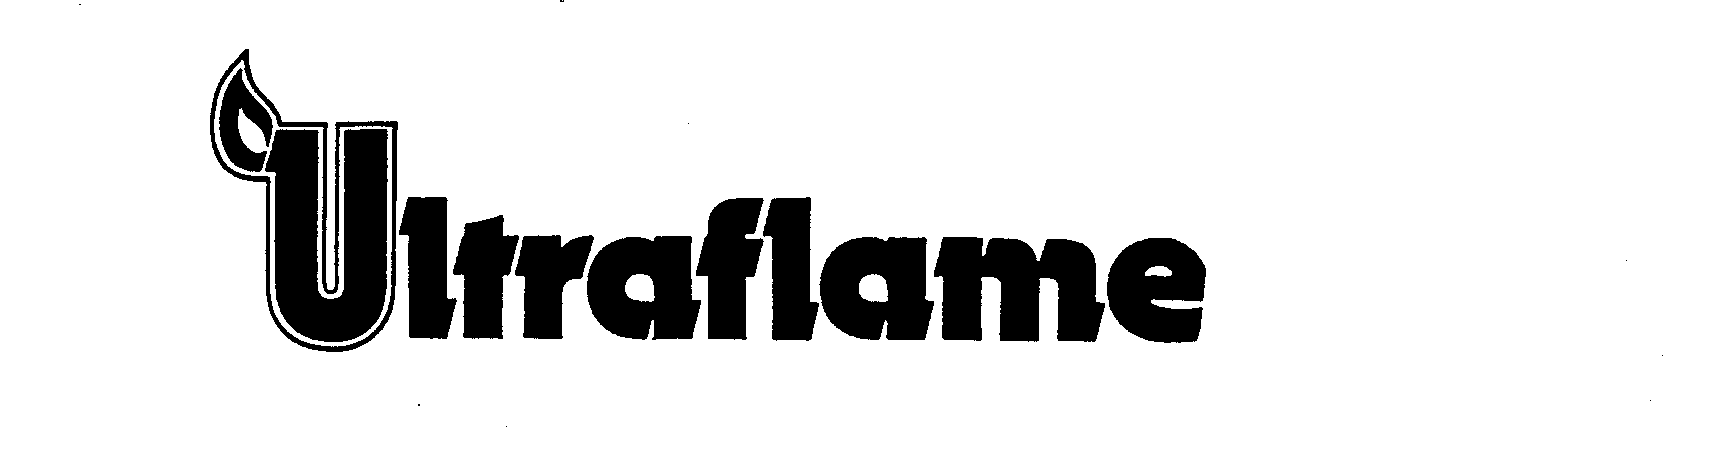 Trademark Logo ULTRAFLAME